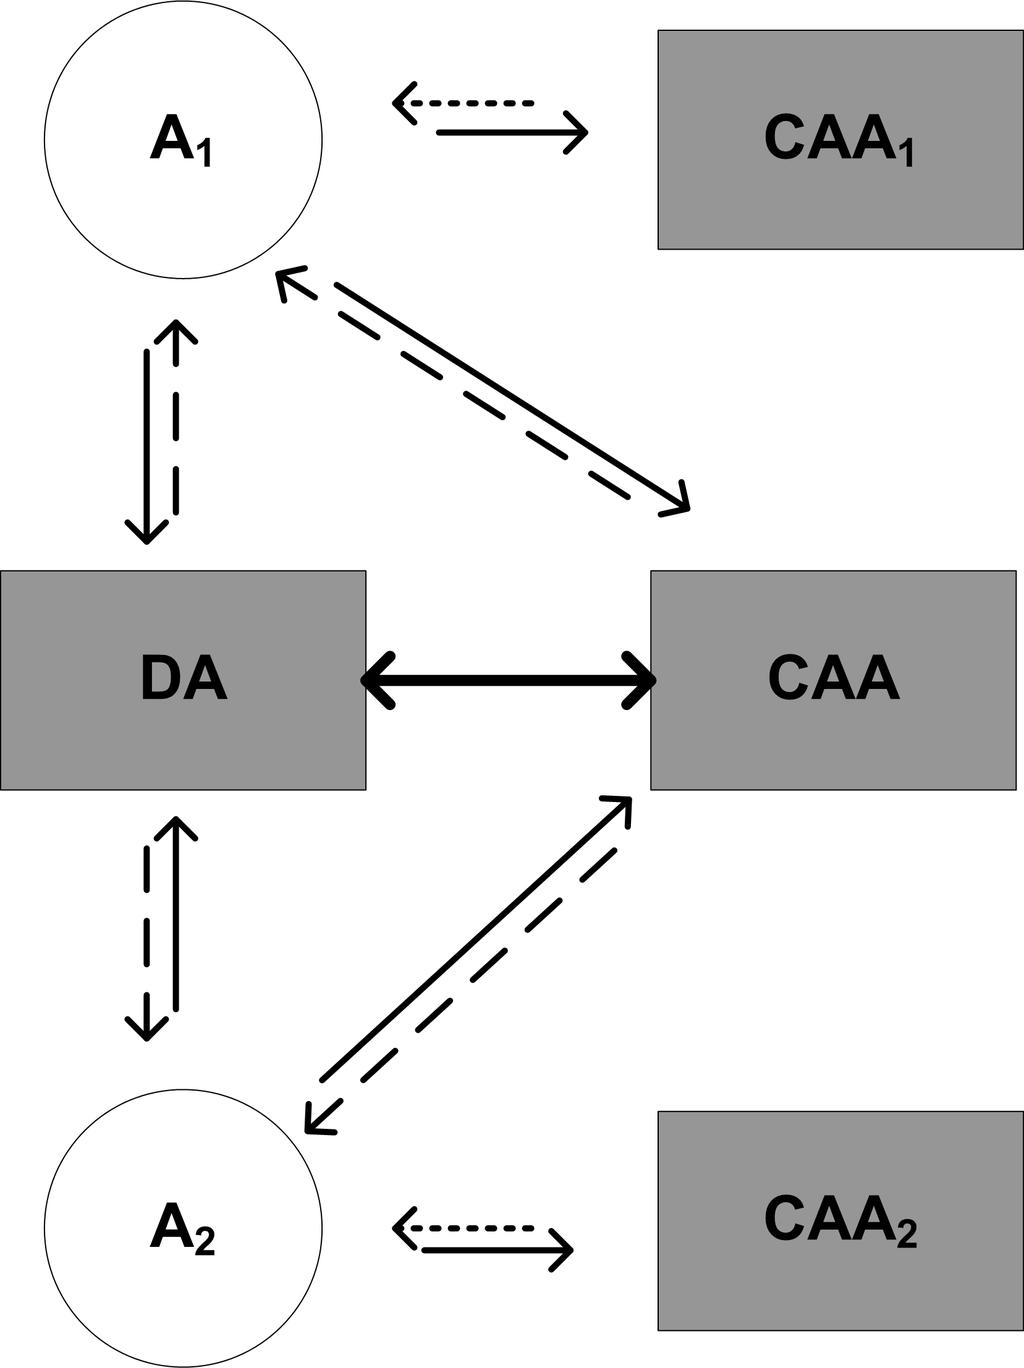 Motivation/Background Architecture for ADR Architecture The general architecture of our ADR system follows the A&A meta model [Omicini et al.